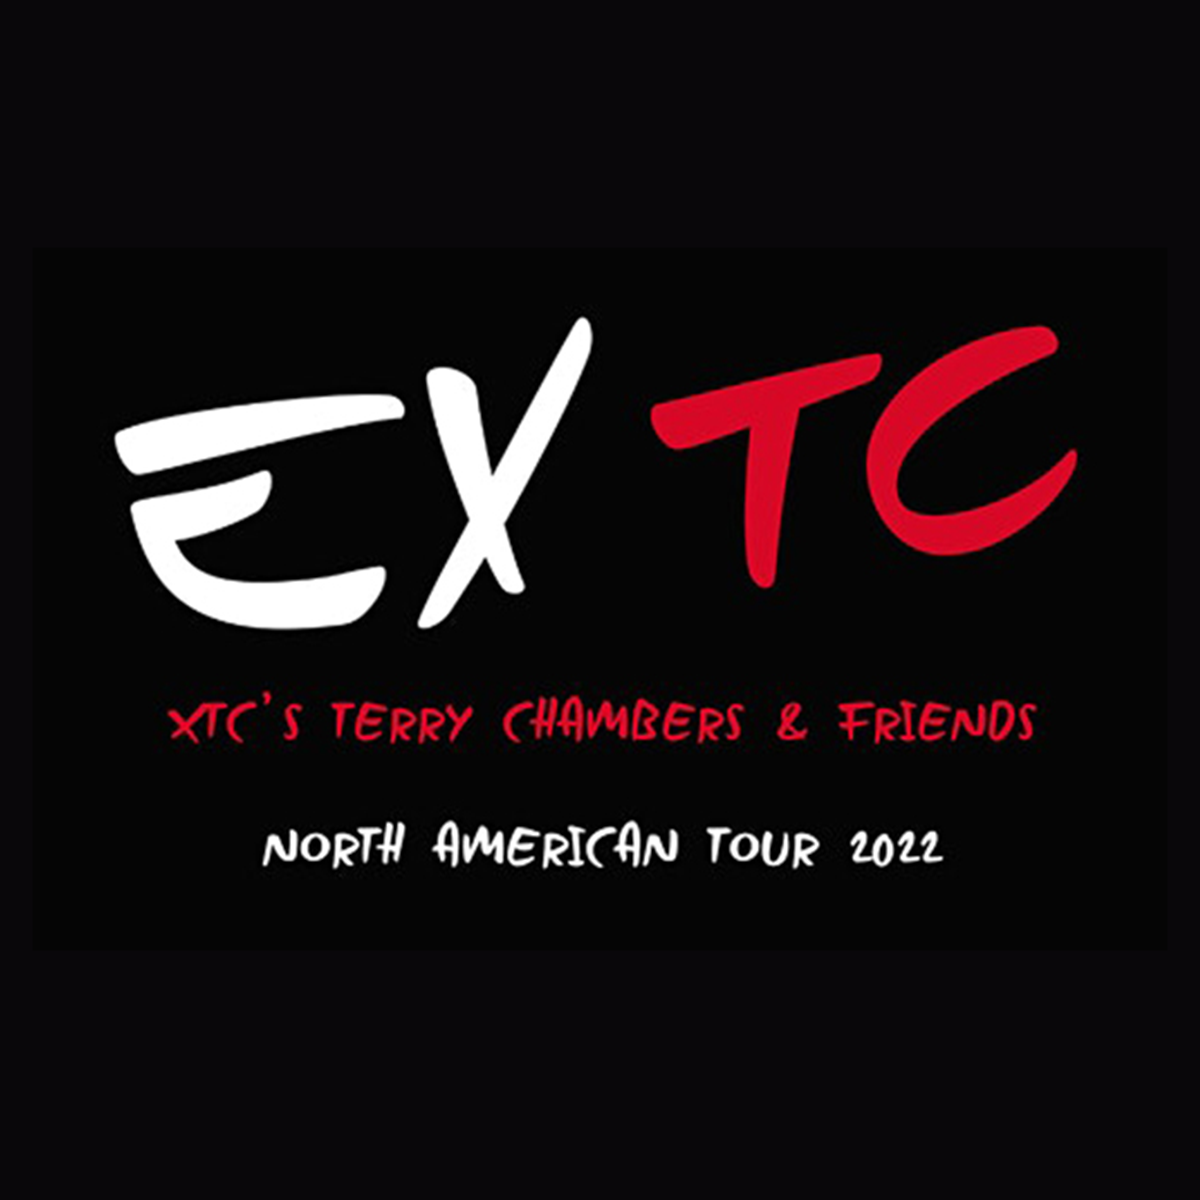 EXTC Rekindles Classic Band’s Legacy